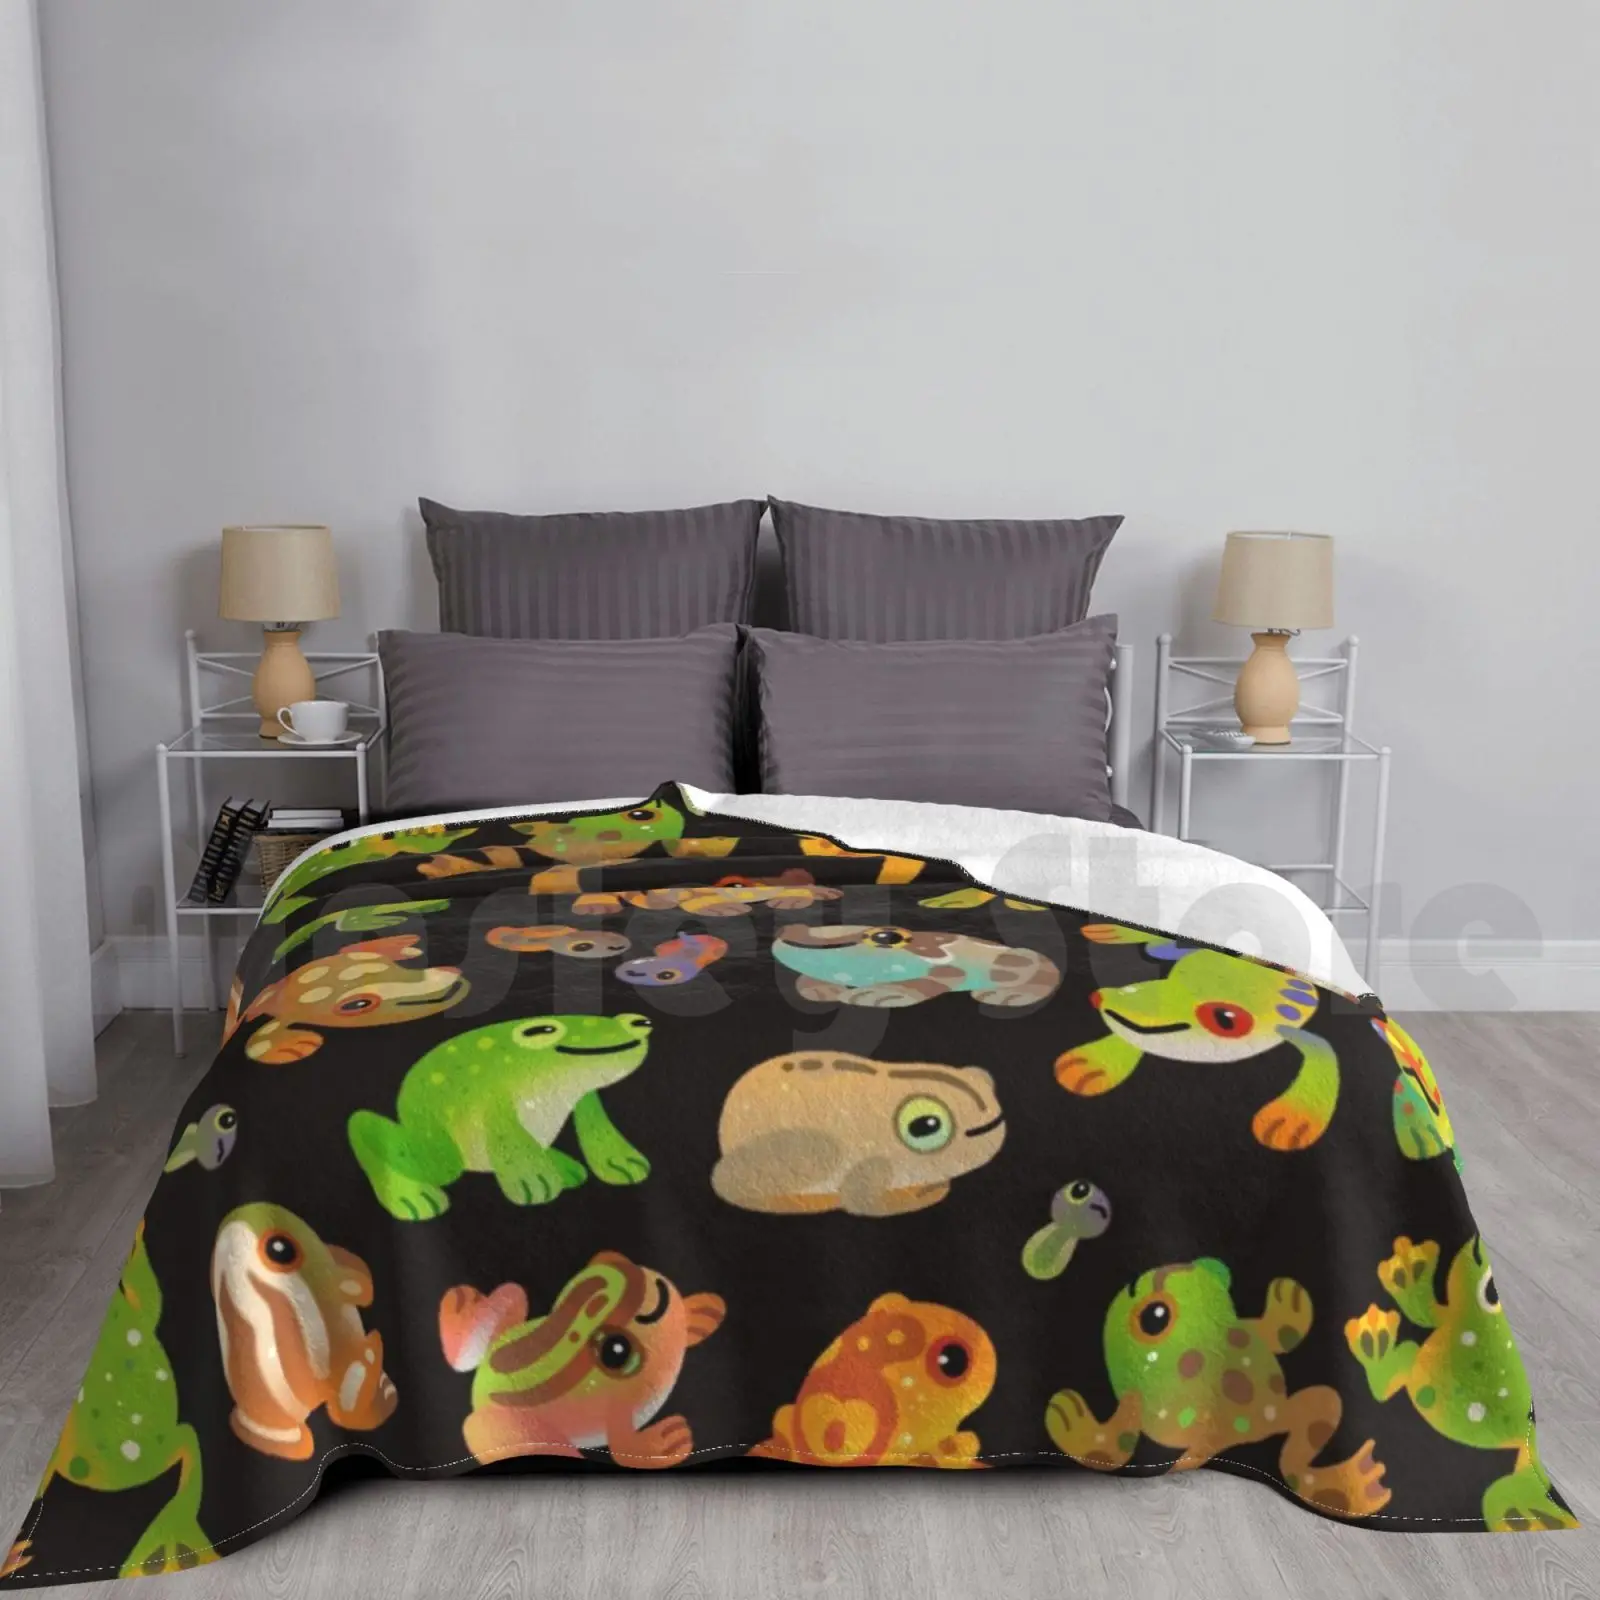 Модное темное одеяло с лягушкой на заказ 2444 дерево лягушка животное милое